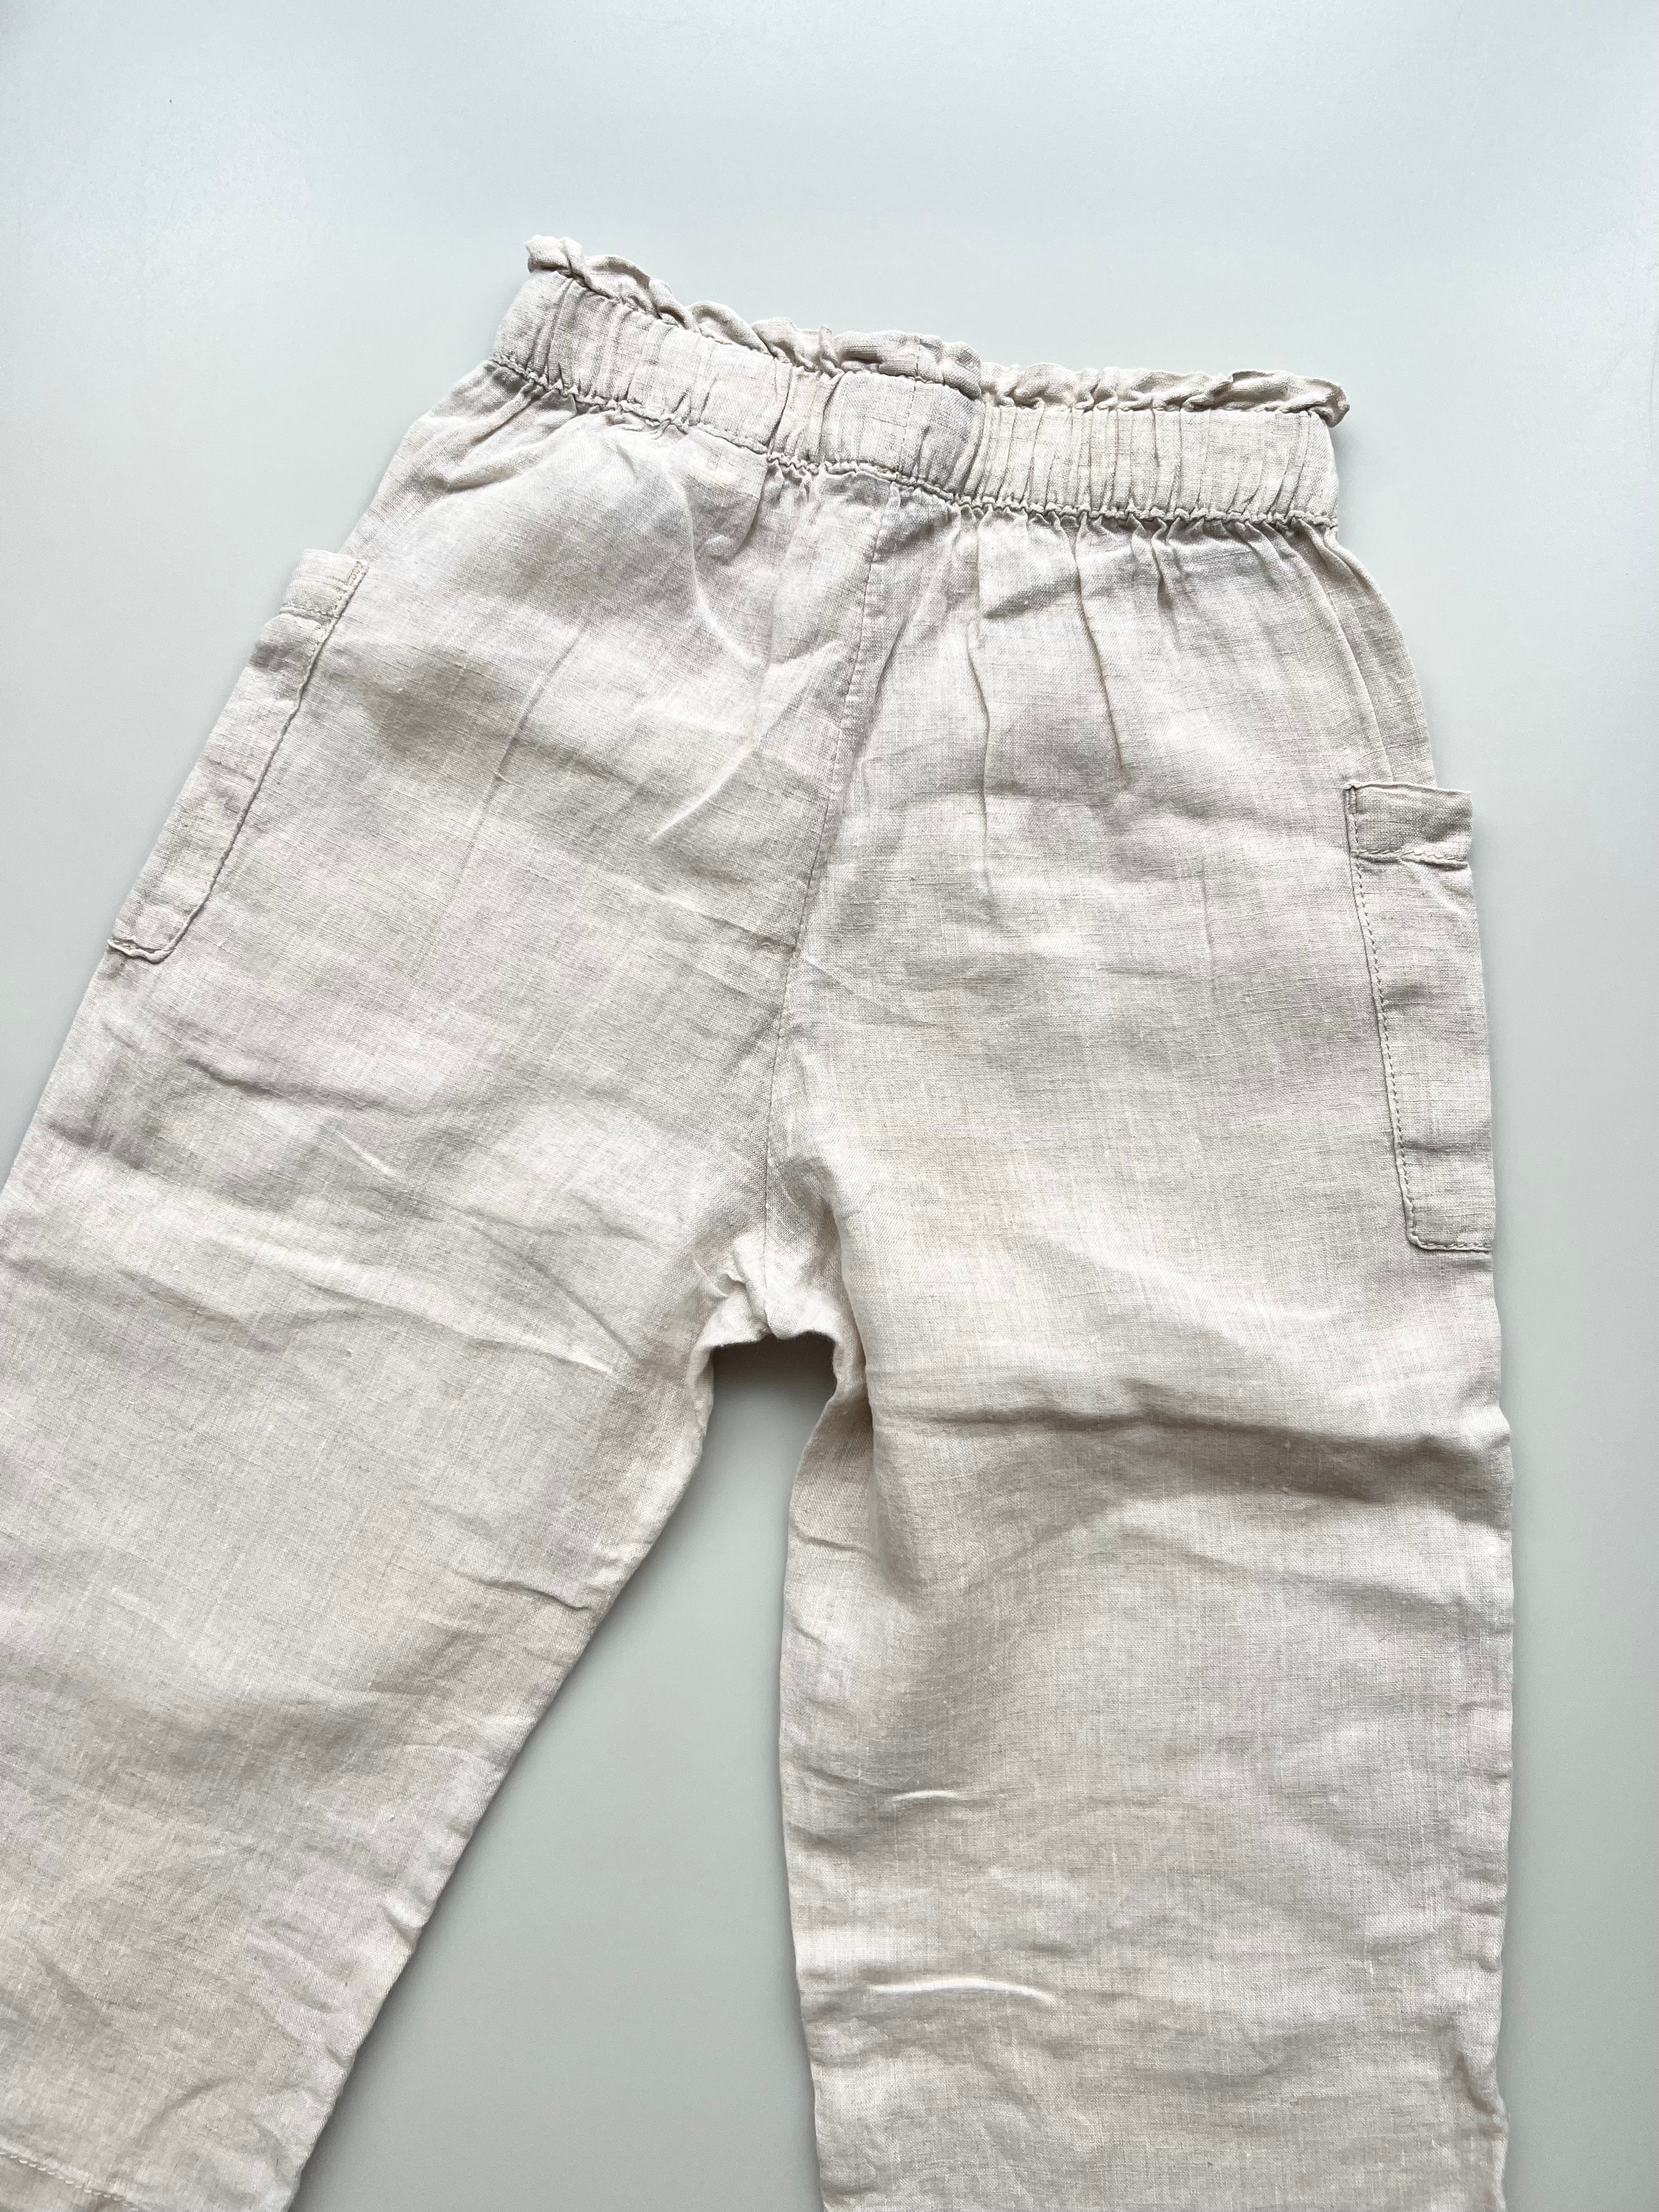 H&M 100% Linen Trousers Age 5-6